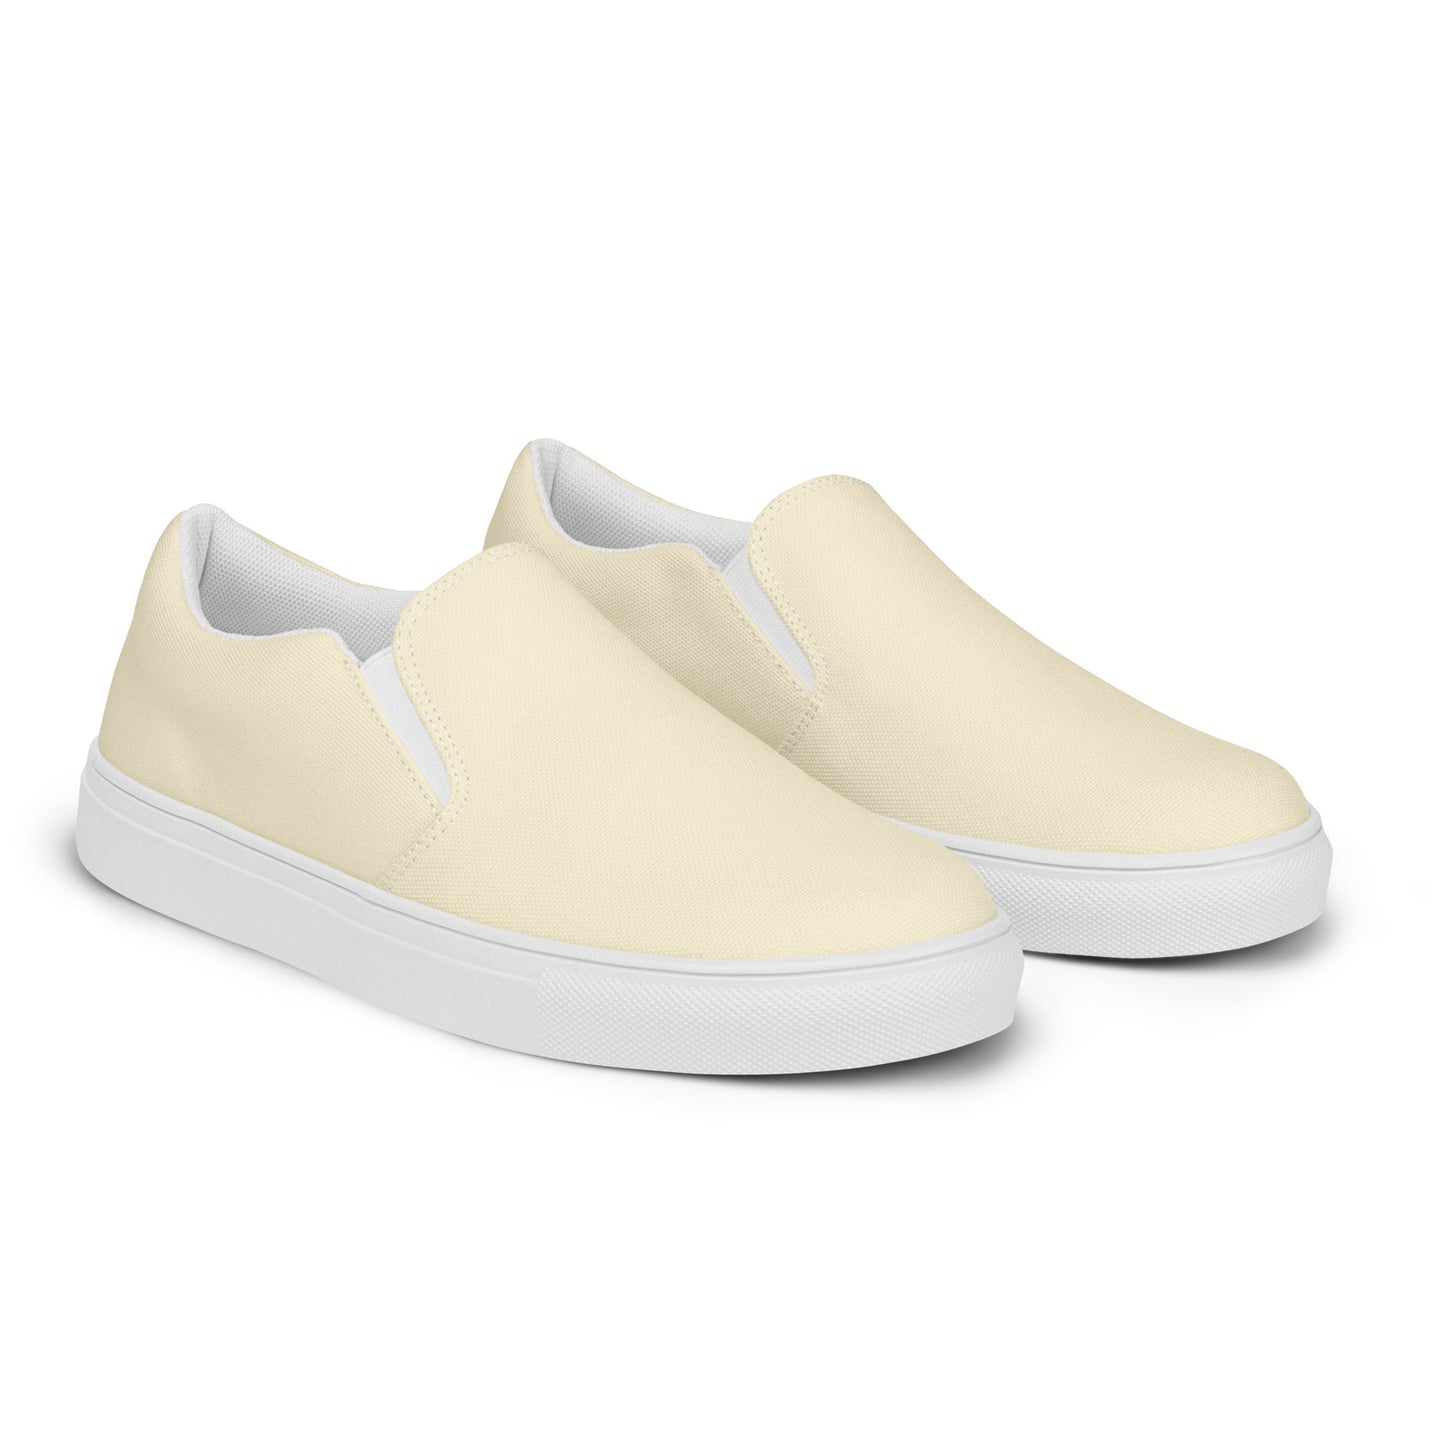 klasneakers Men’s slip-on canvas shoes - Cream